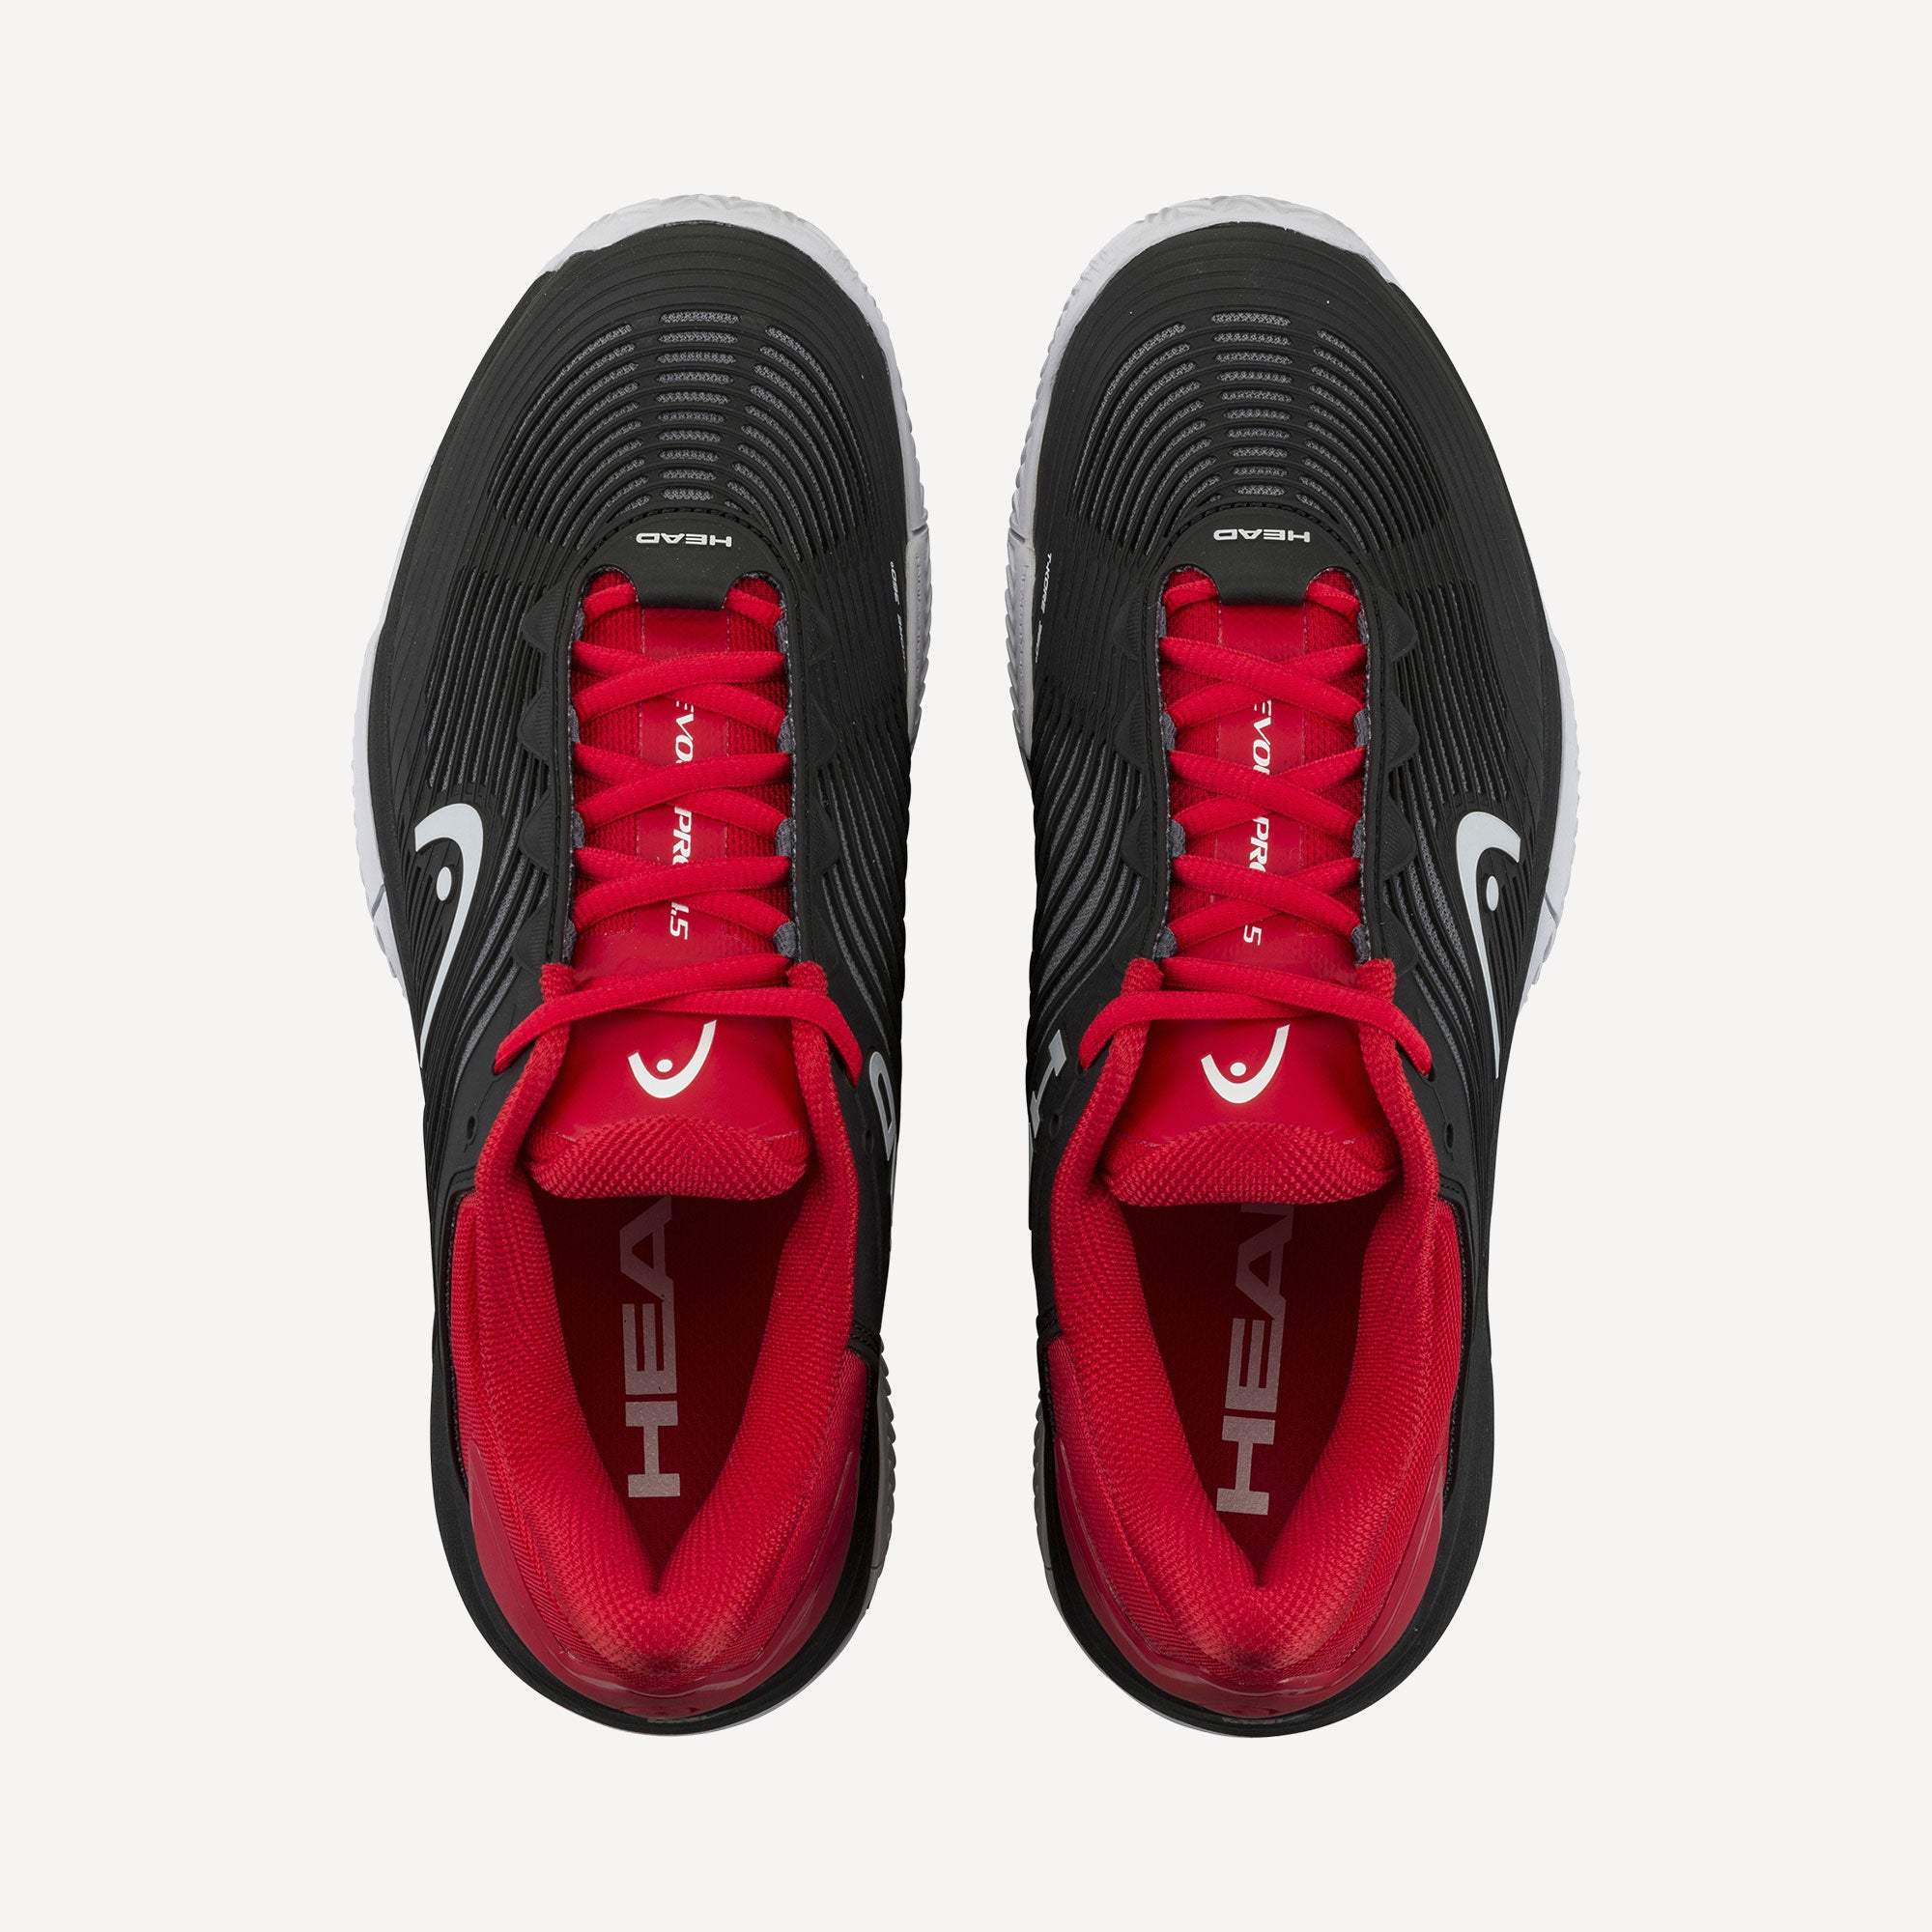 HEAD Revolt Pro 4.5 Men's Clay Court Tennis Shoes - Black/Red (4)